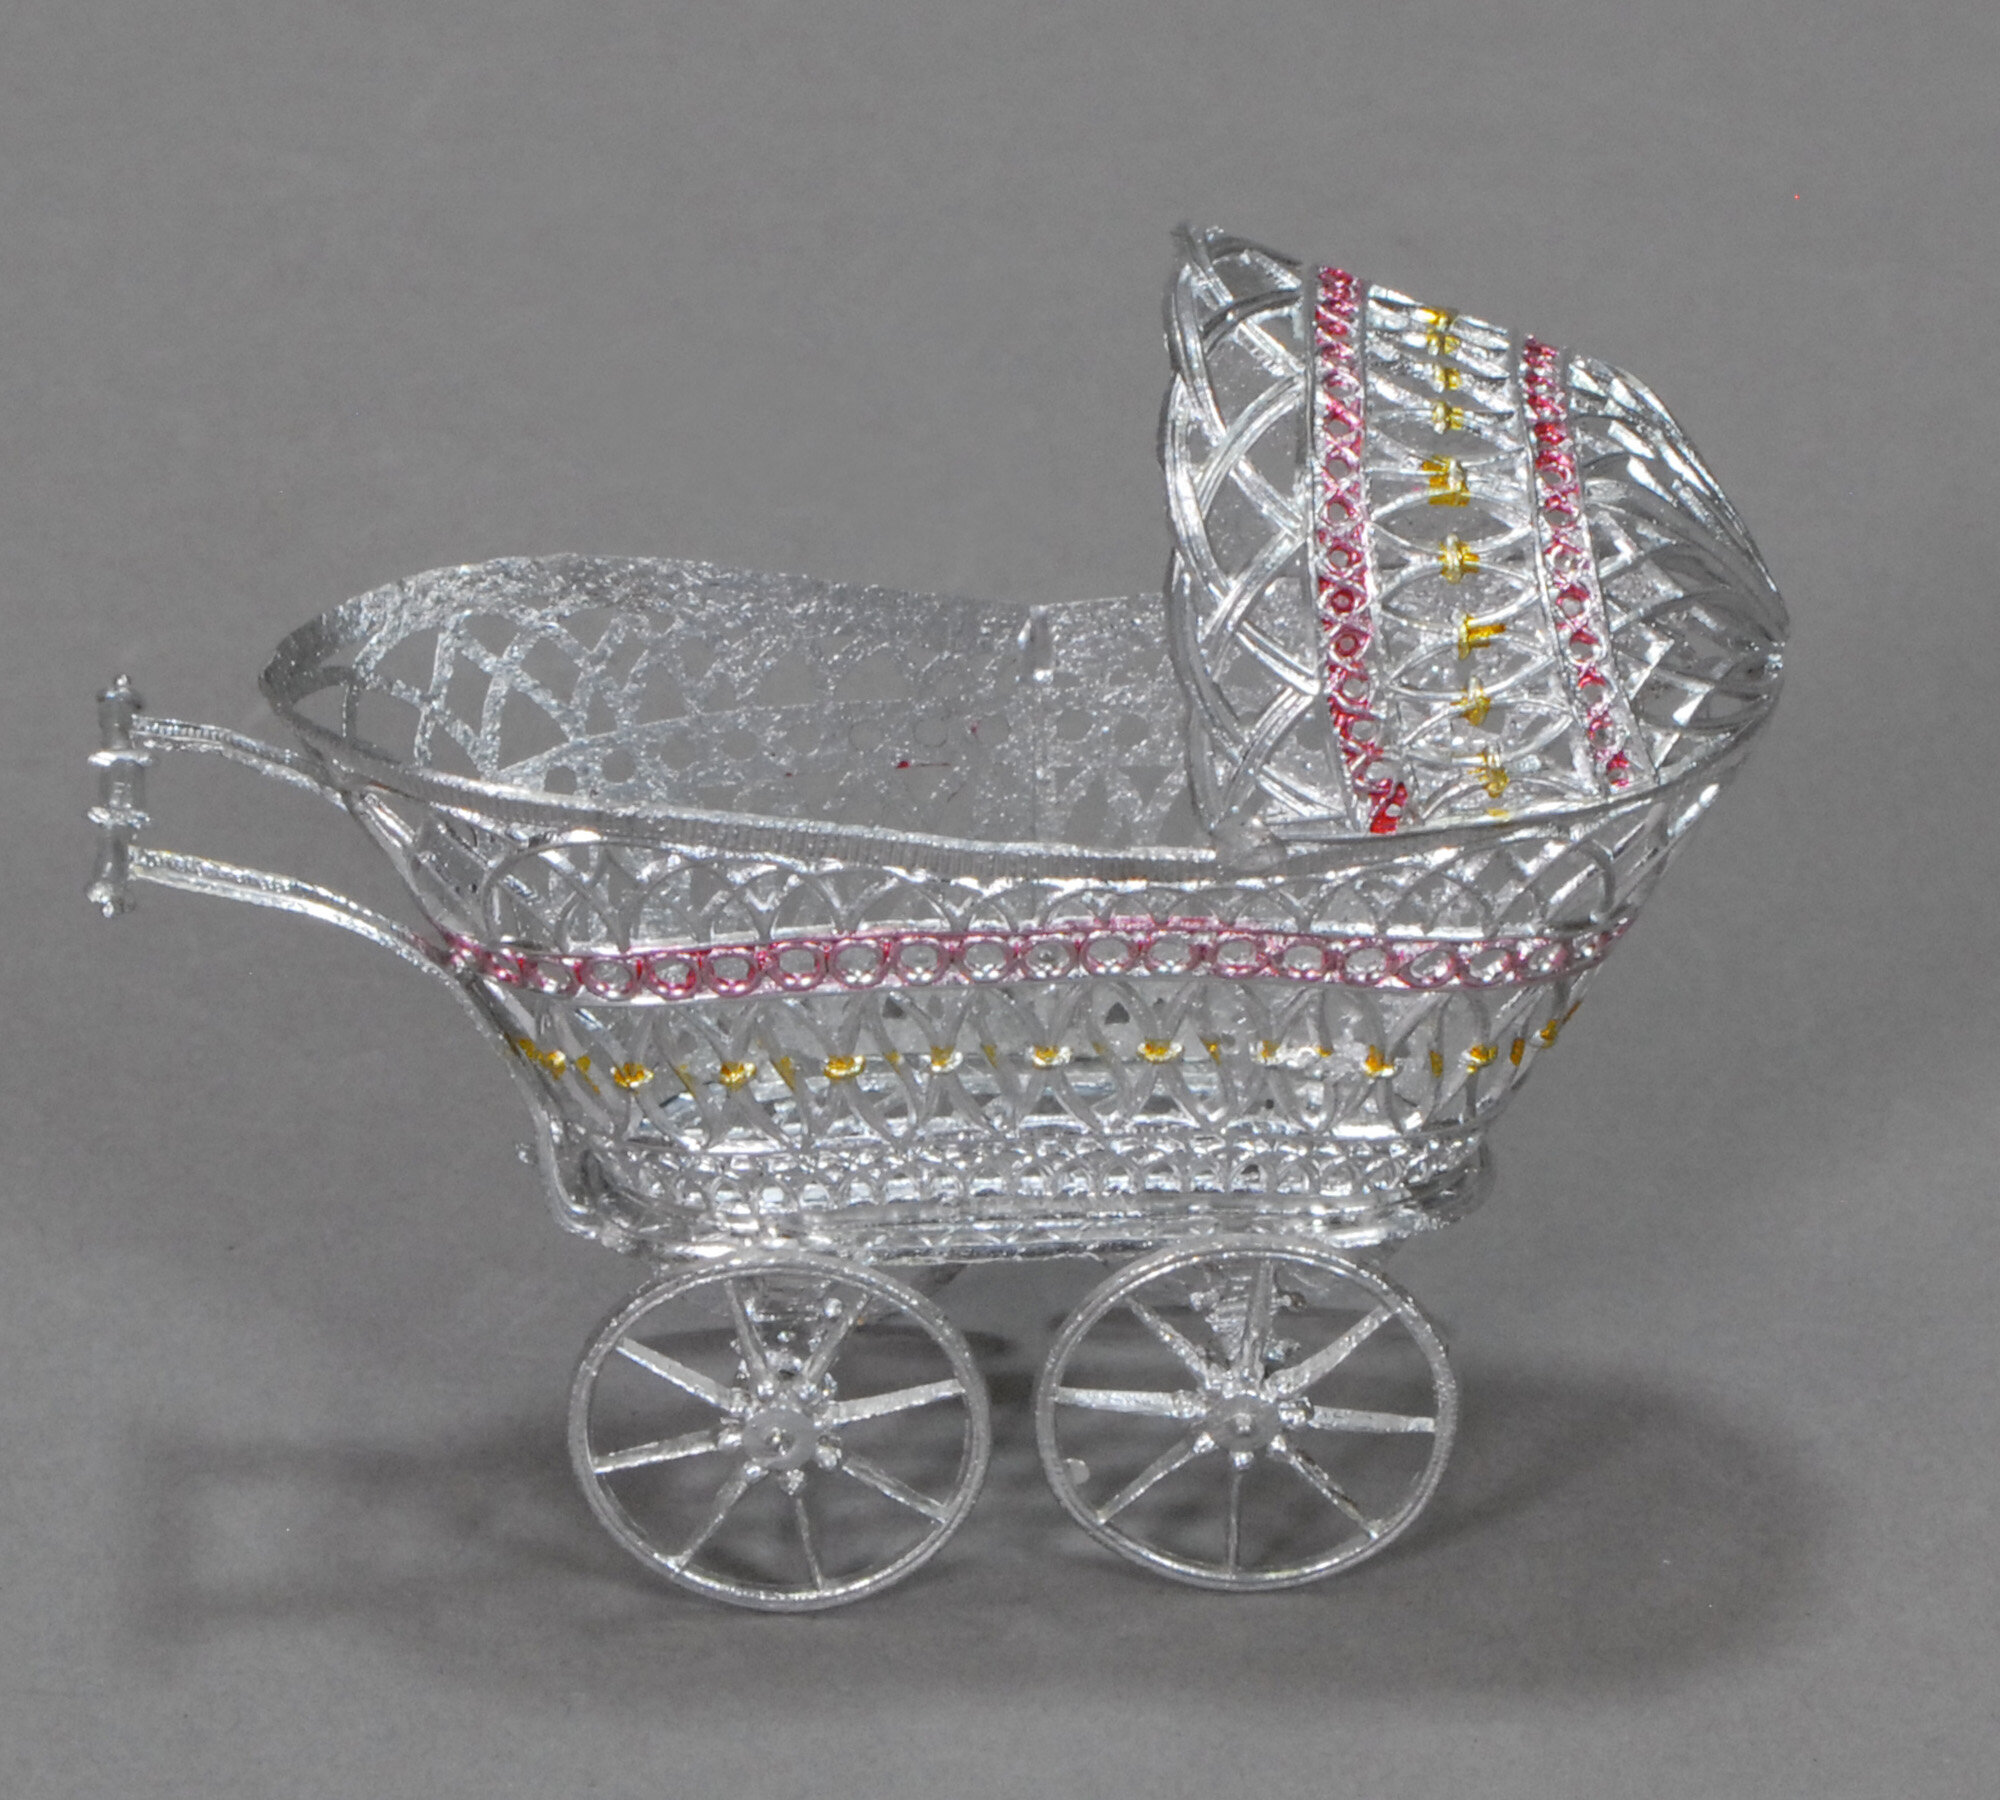 Dollhouse Miniature White Metal Baby Carriage 